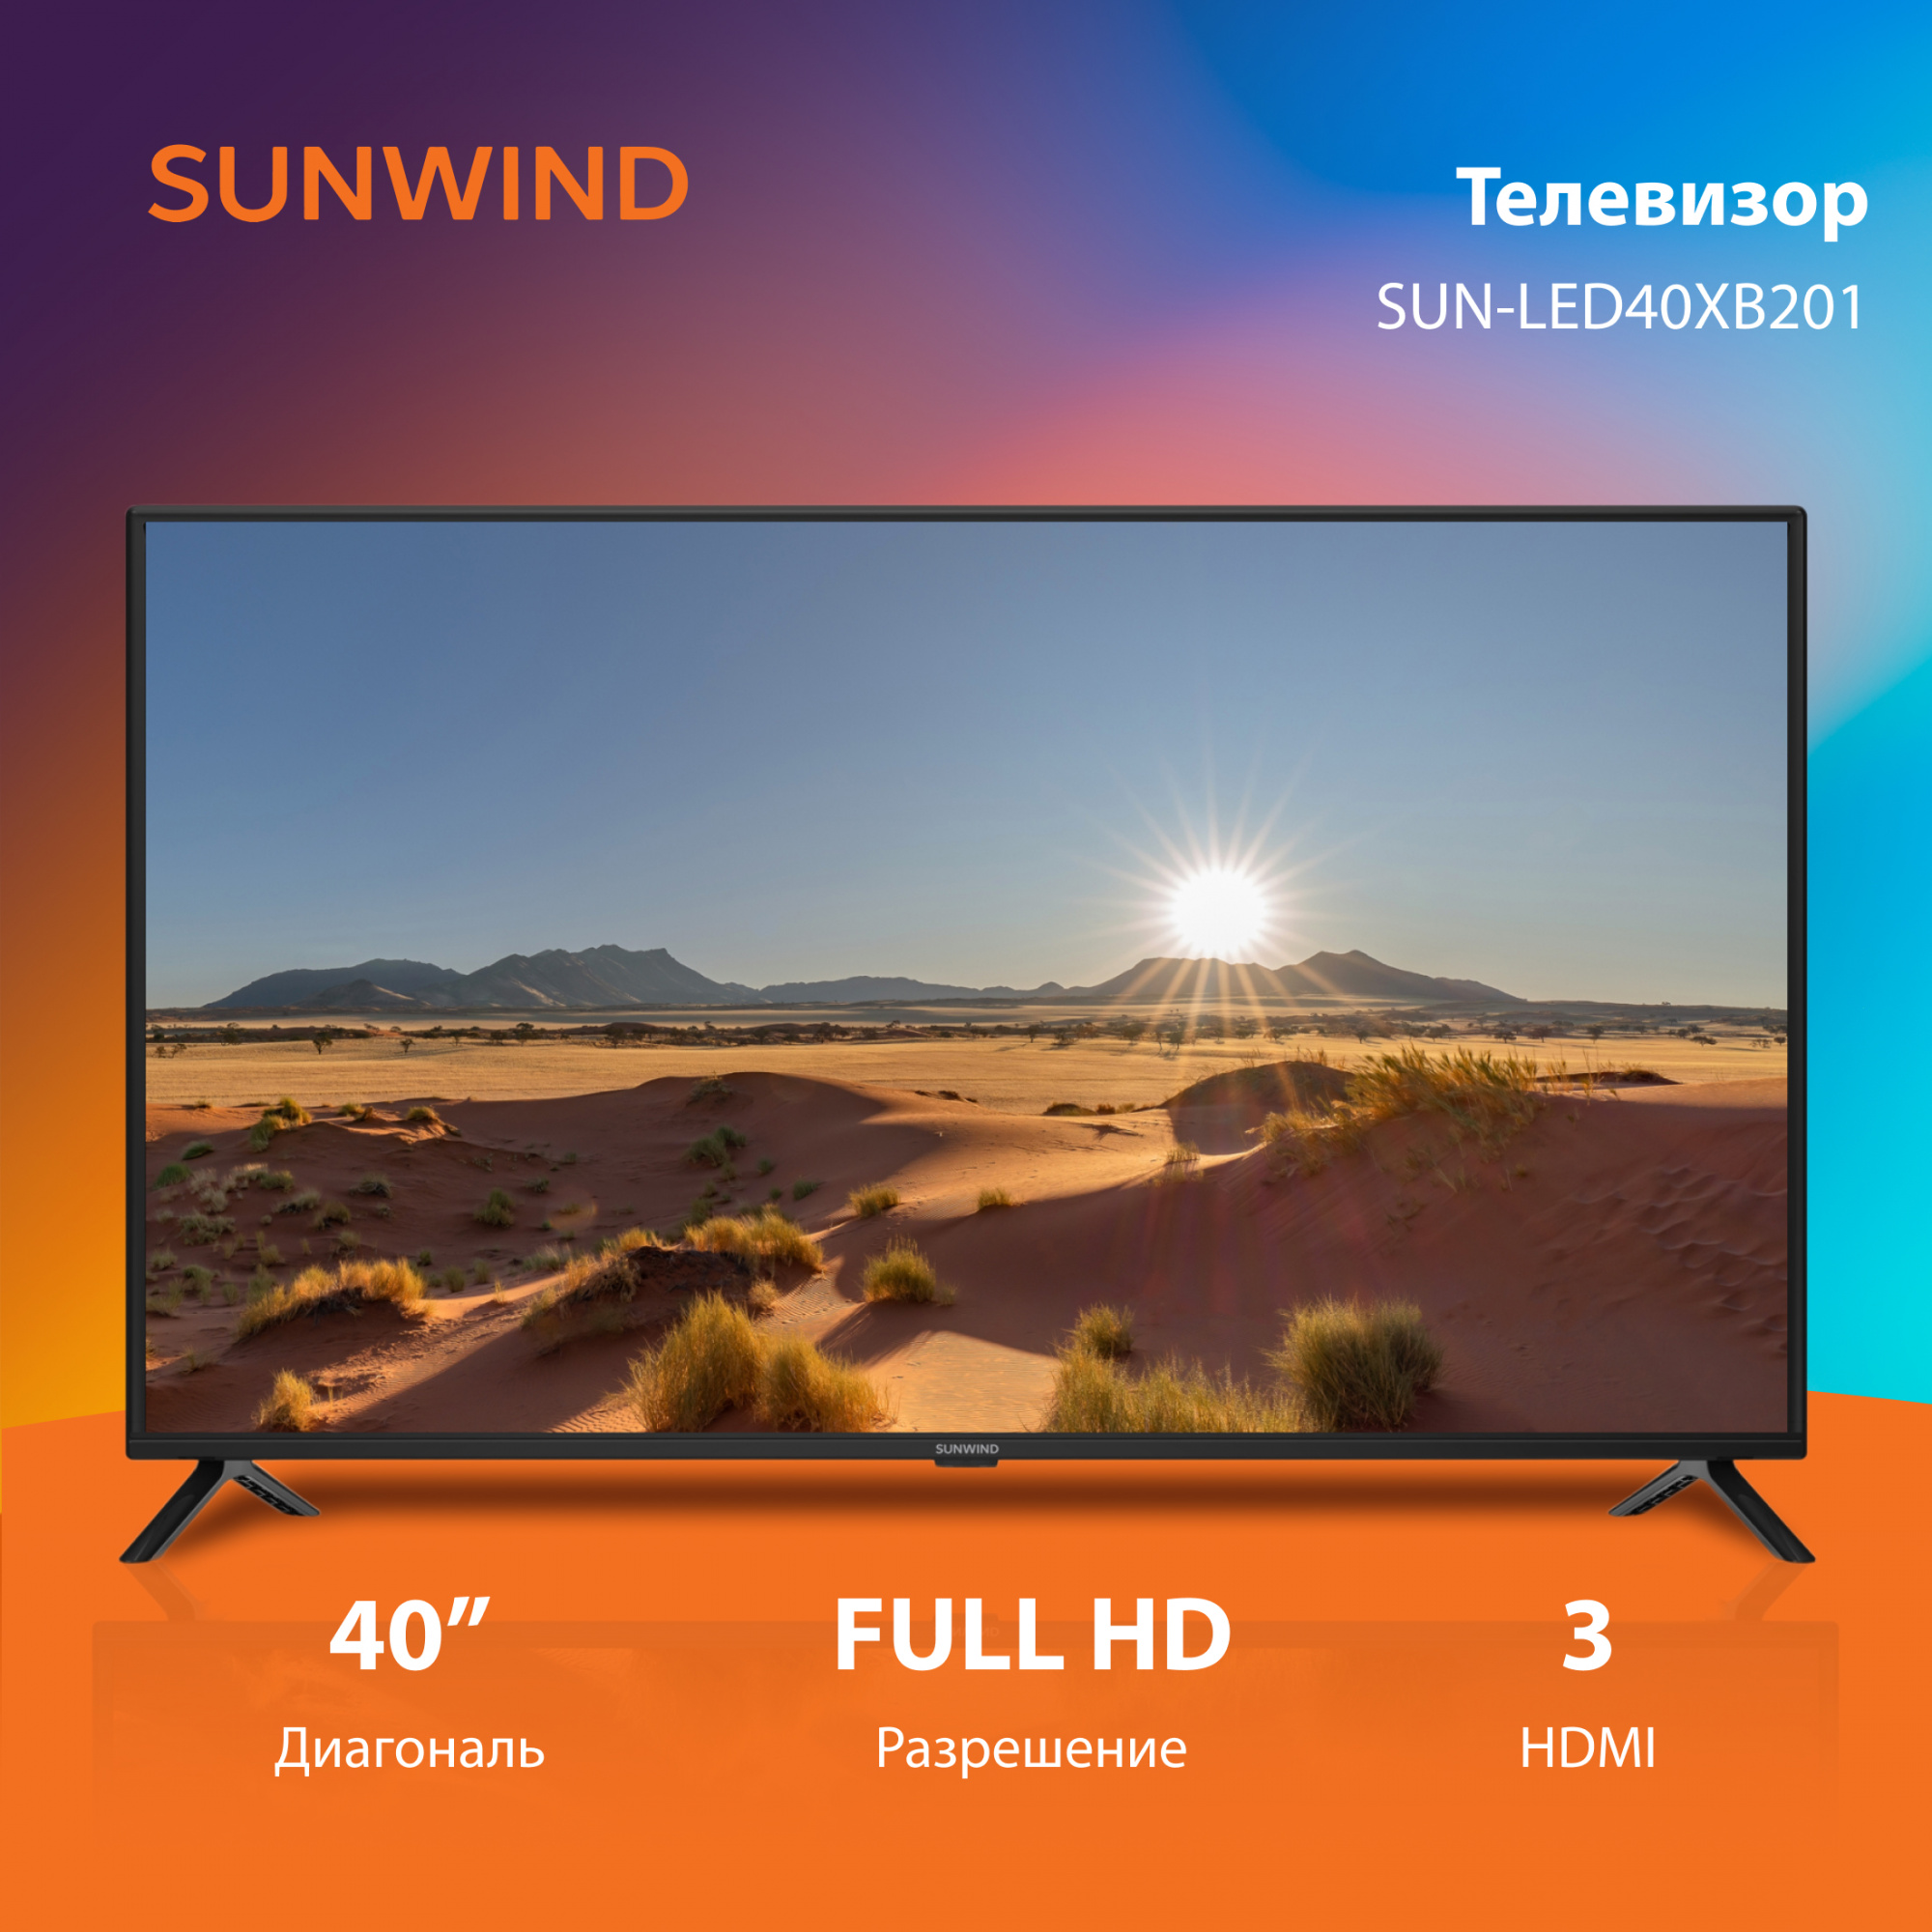 Телевизор Sunwind 50 дюймов. Телевизор Sunwind Sun-led50xu400.